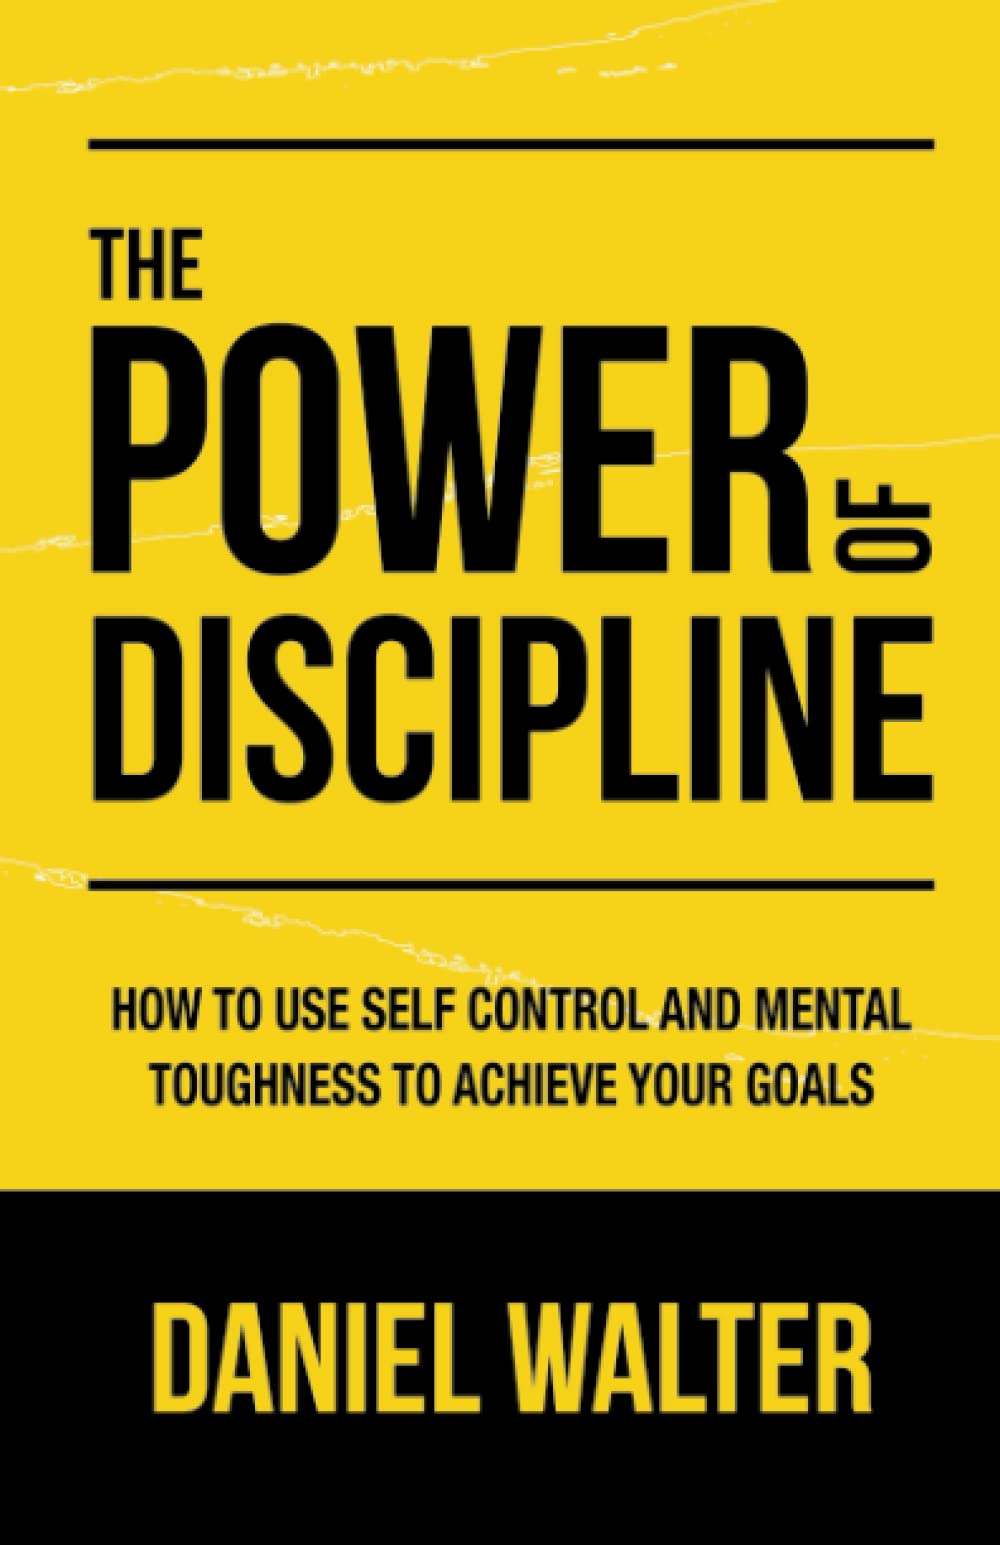 "The Power of Discipline"